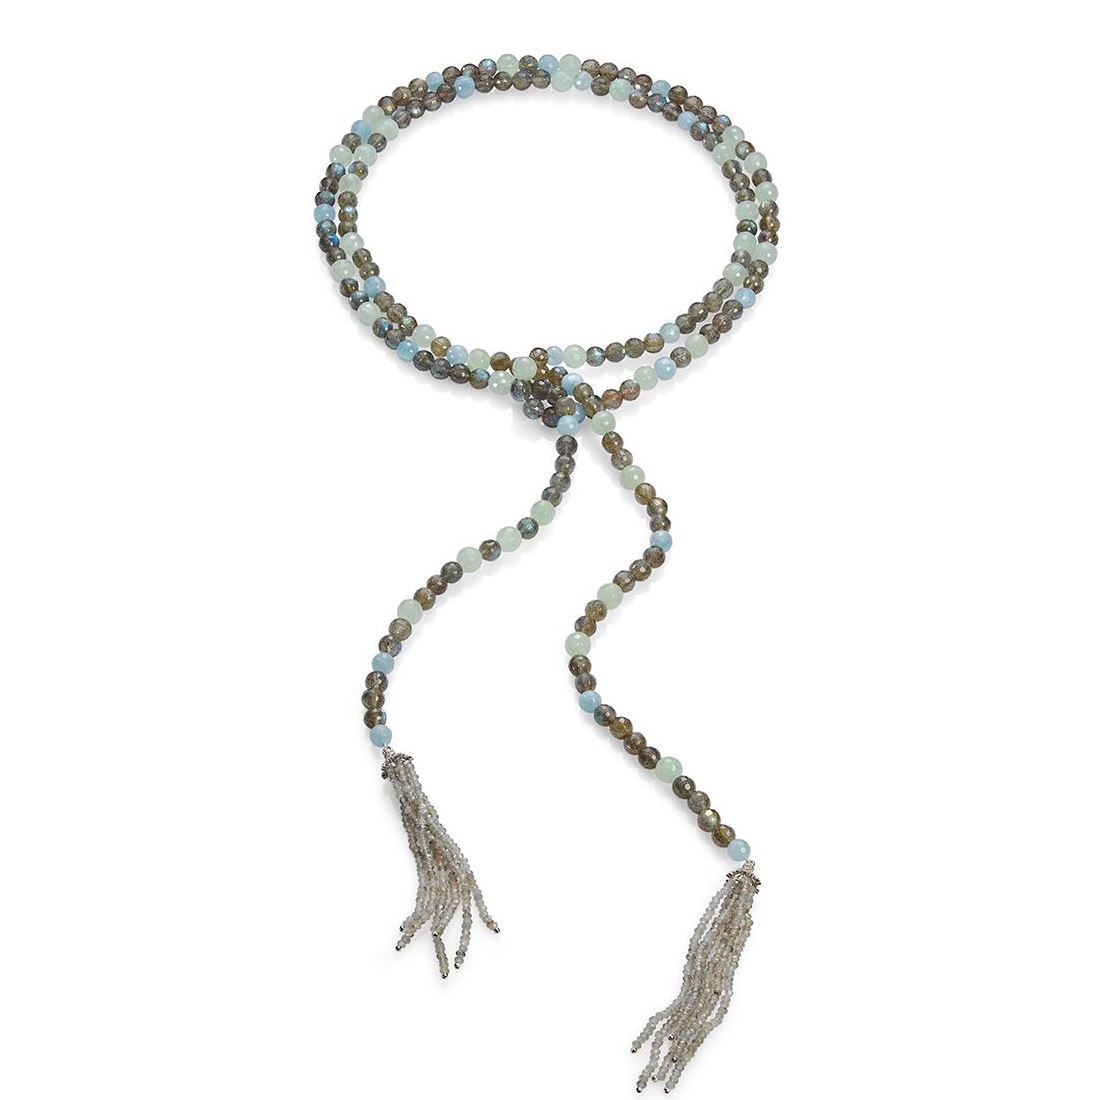 Незамкнутое ожерелье Дайана из лабрадорита, аквамарина и пренита